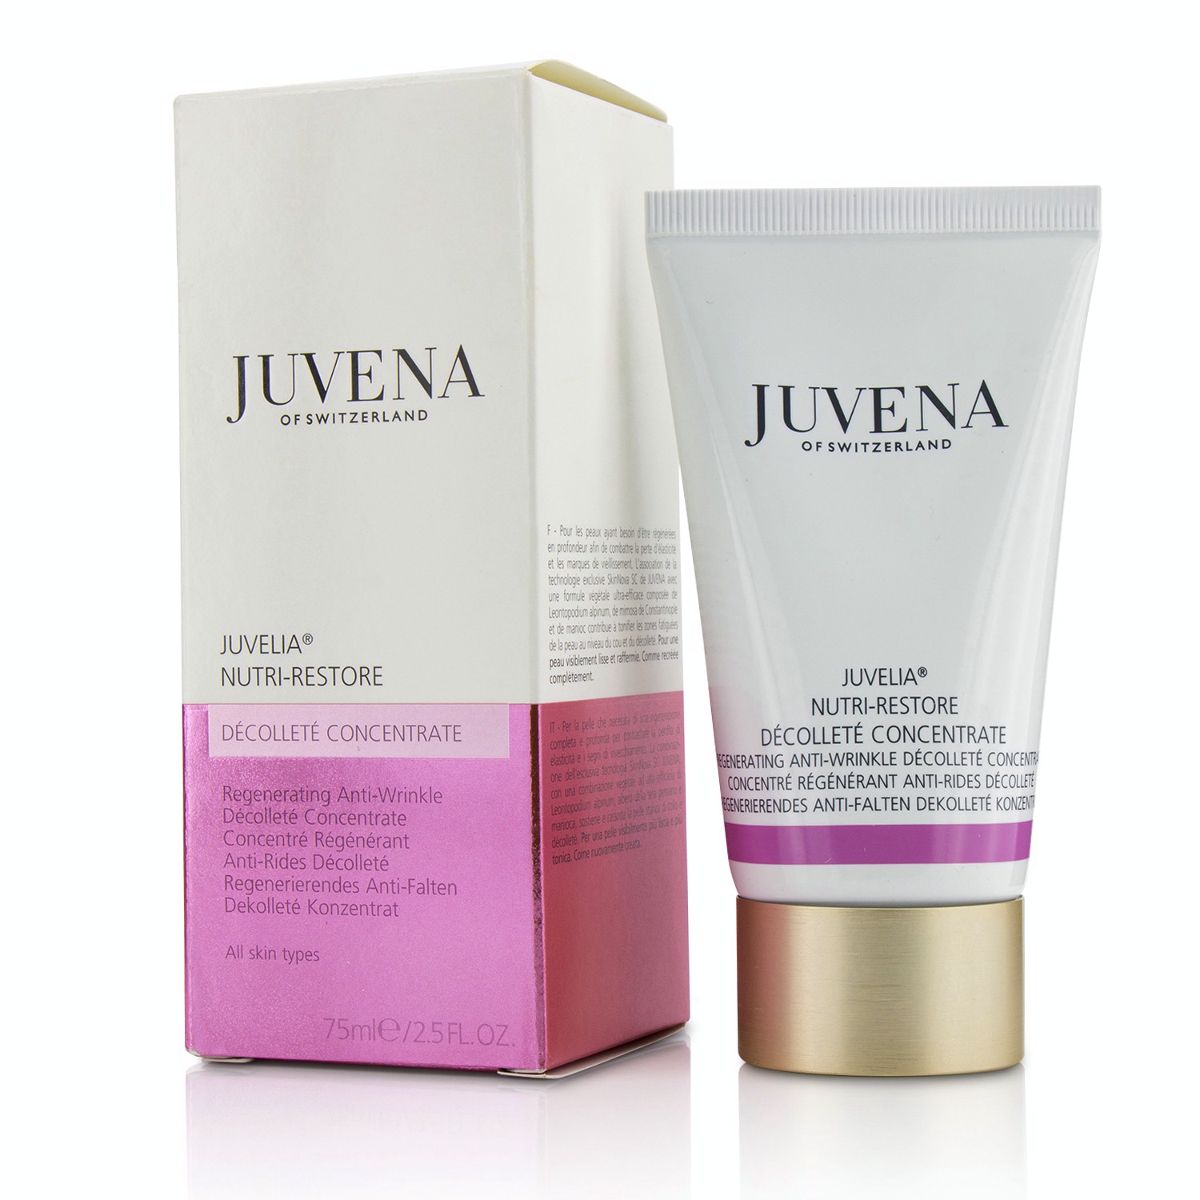 Juvelia Nutri-Restore Regenerating Anti-Wrinkle Decollete Concentrate - All Skin Types Juvena Image